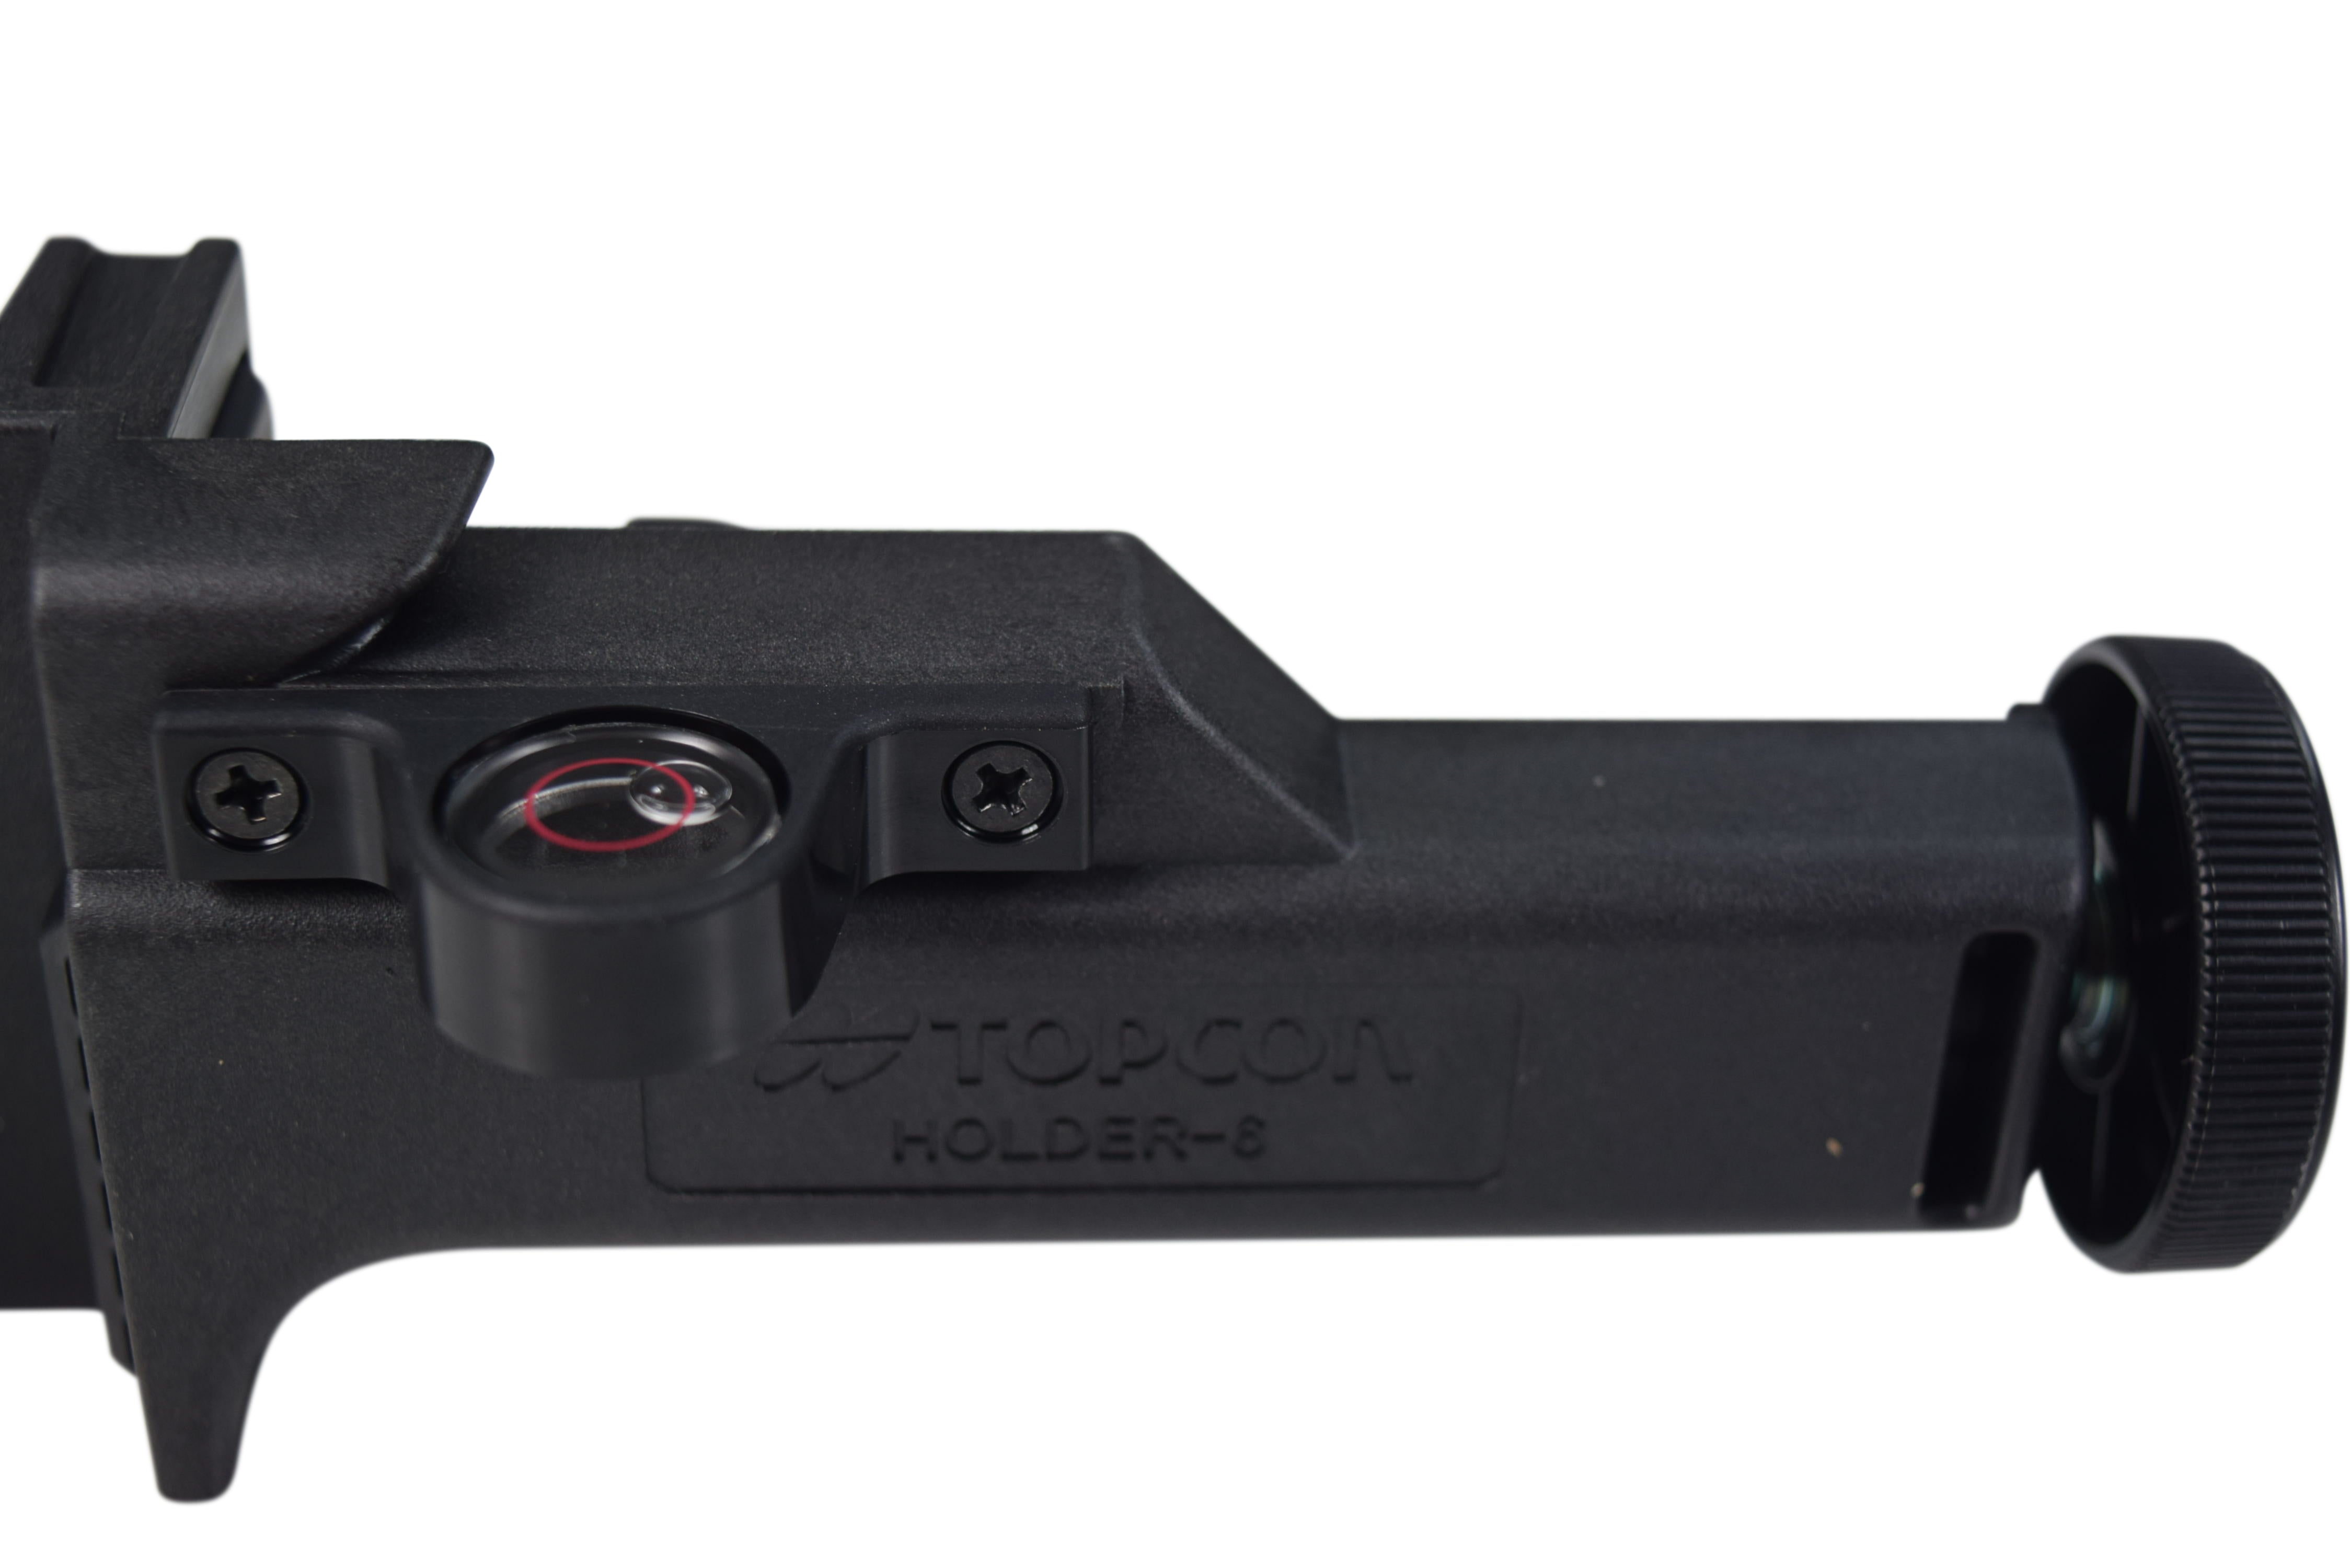 Topcon 312890112 Sensor Holder 6 for LS-80A/B/G/L Laser Level